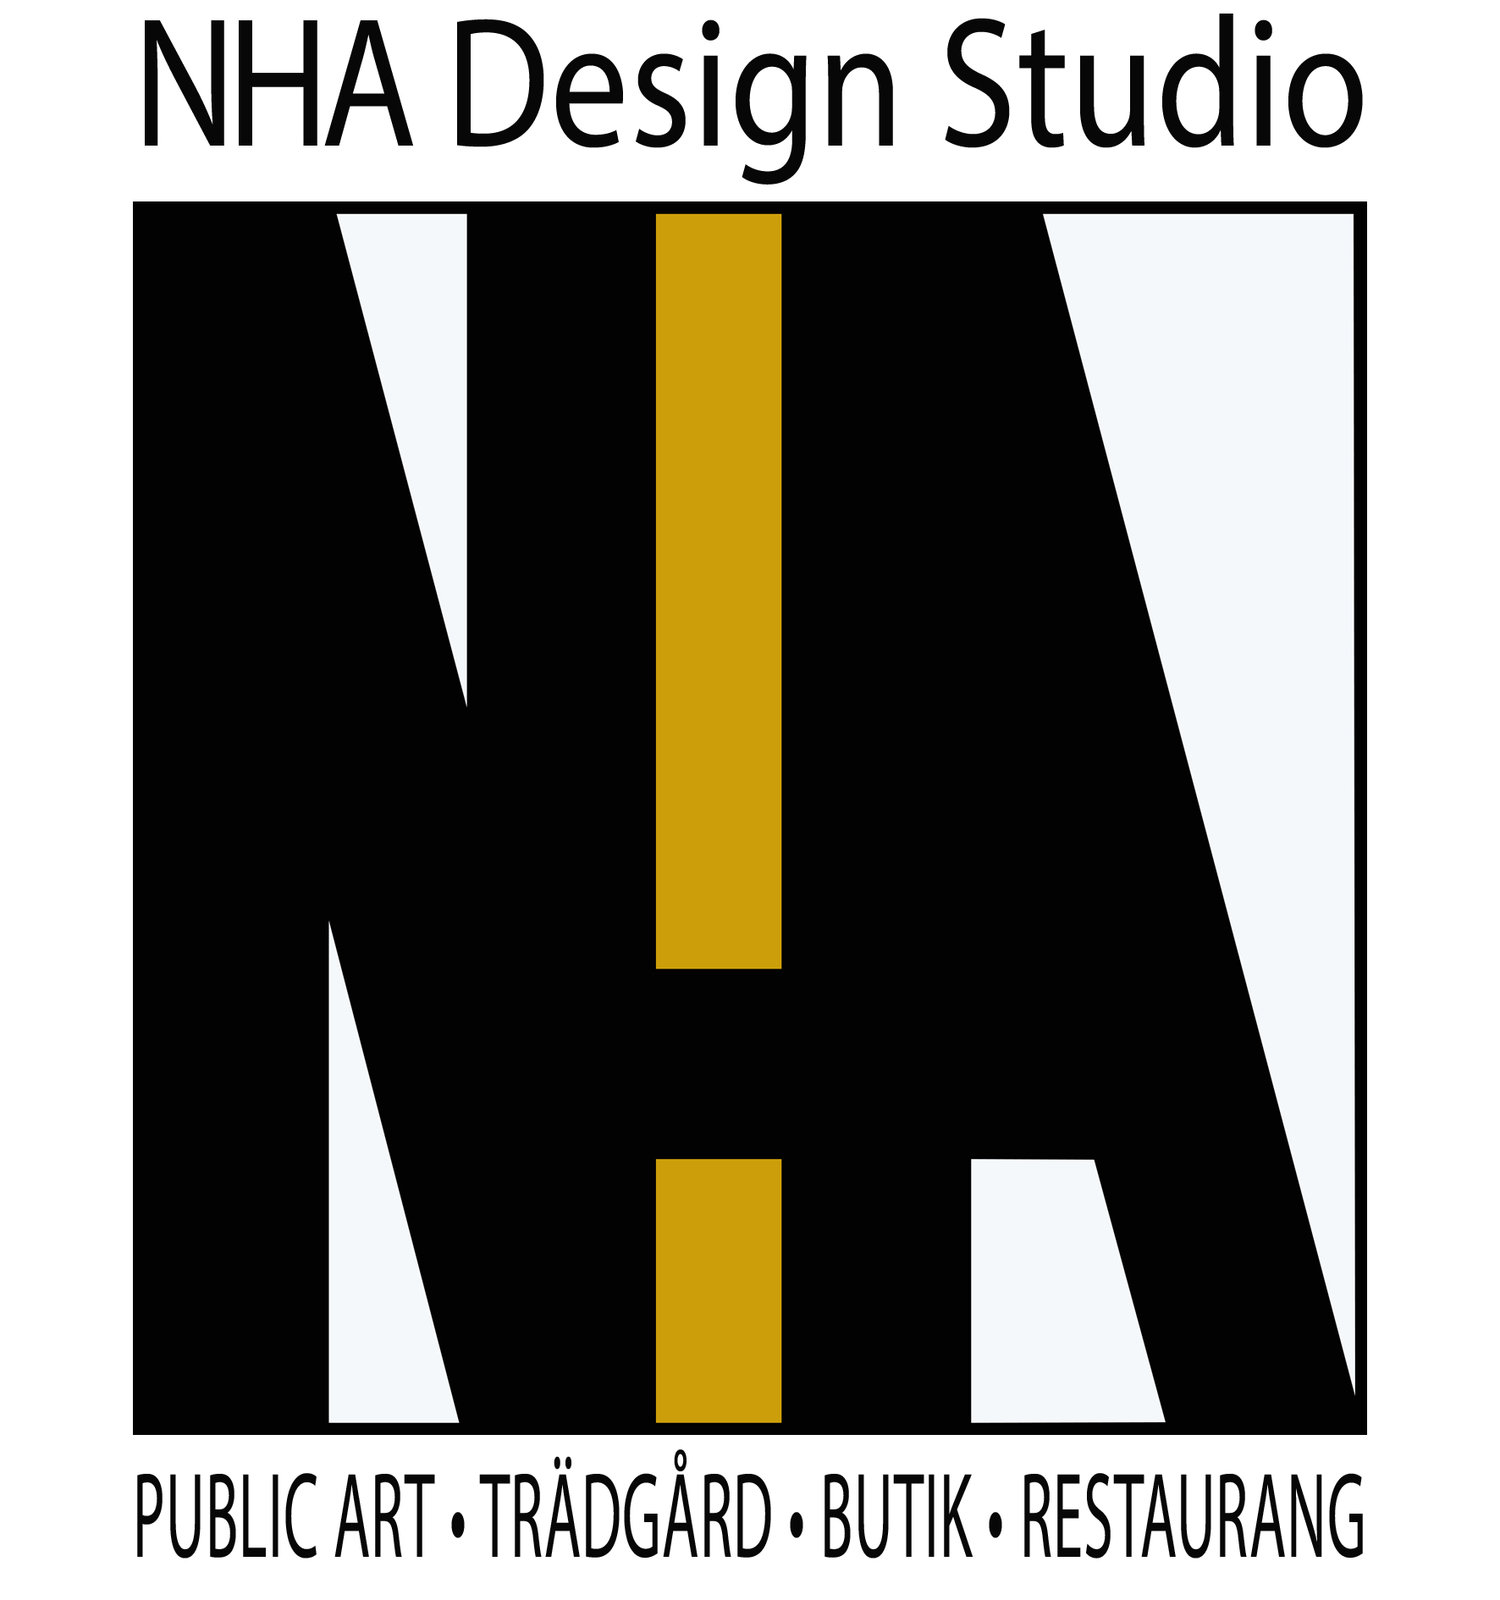 NHA Design Studio